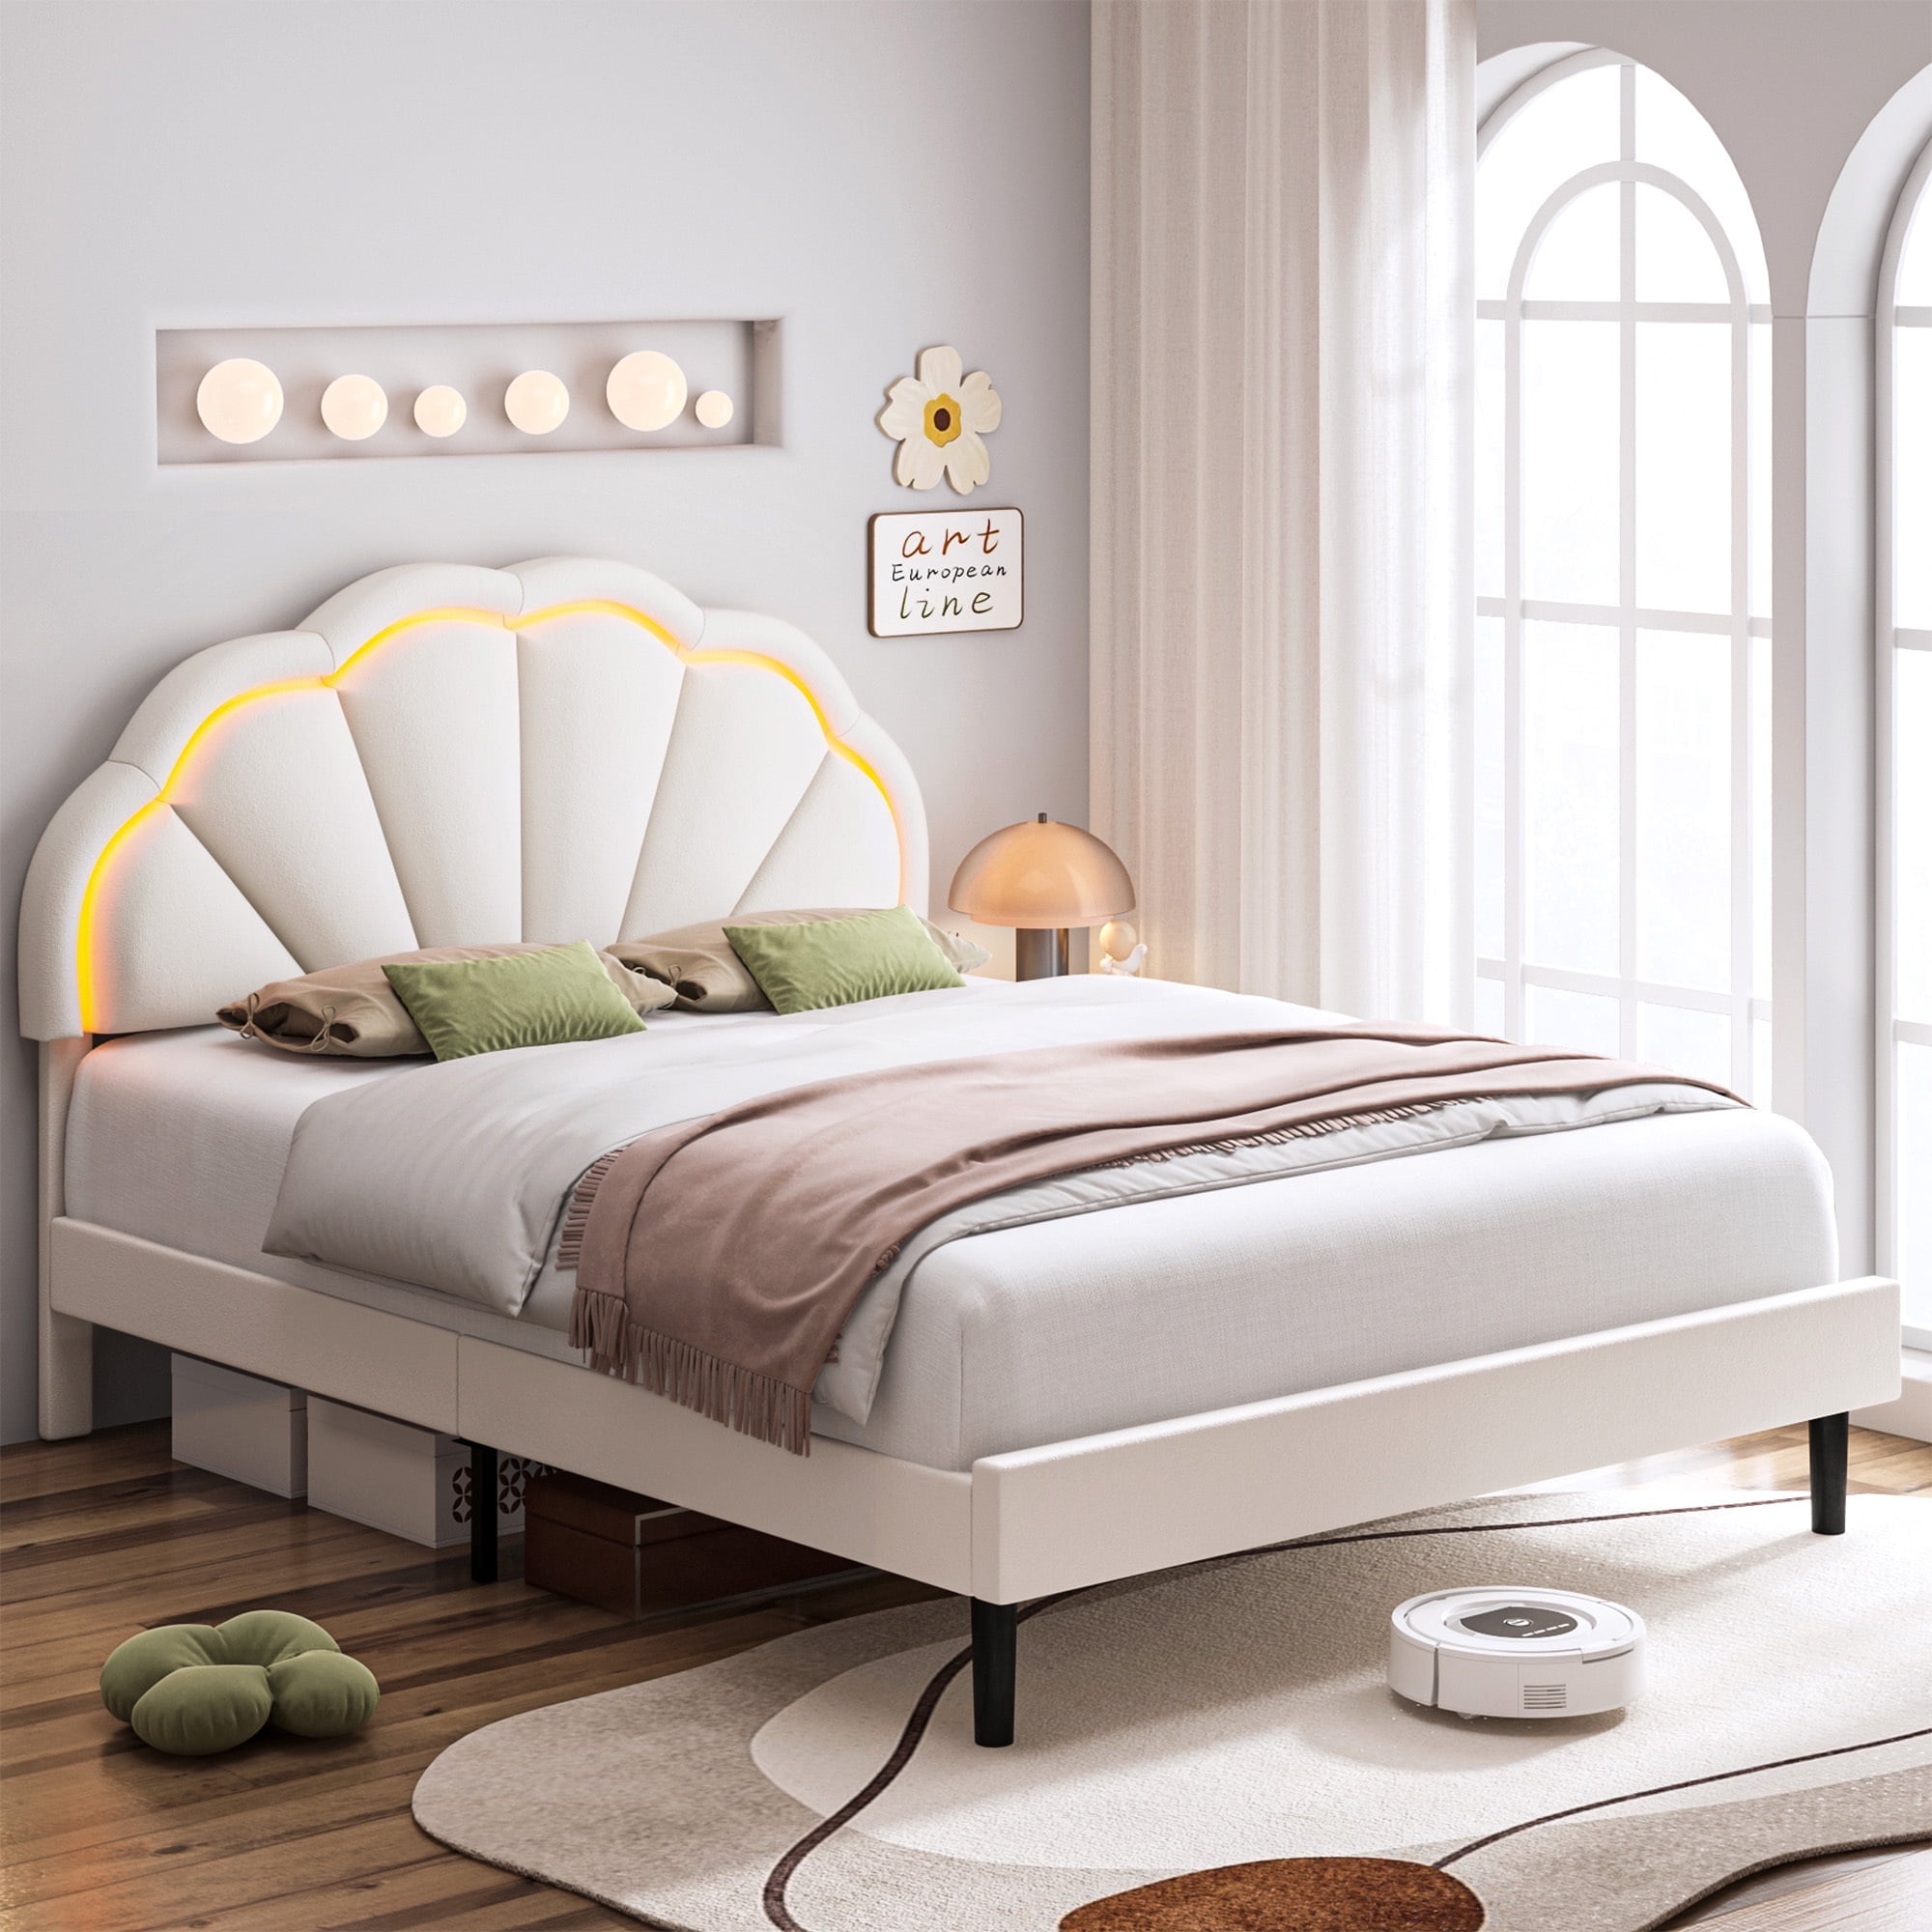 Homfa LED Bed Frame, Queen Size Bed for Kids Girls, Velvet Upholstered Platform Bed with Adjustable Headboard, Off-White